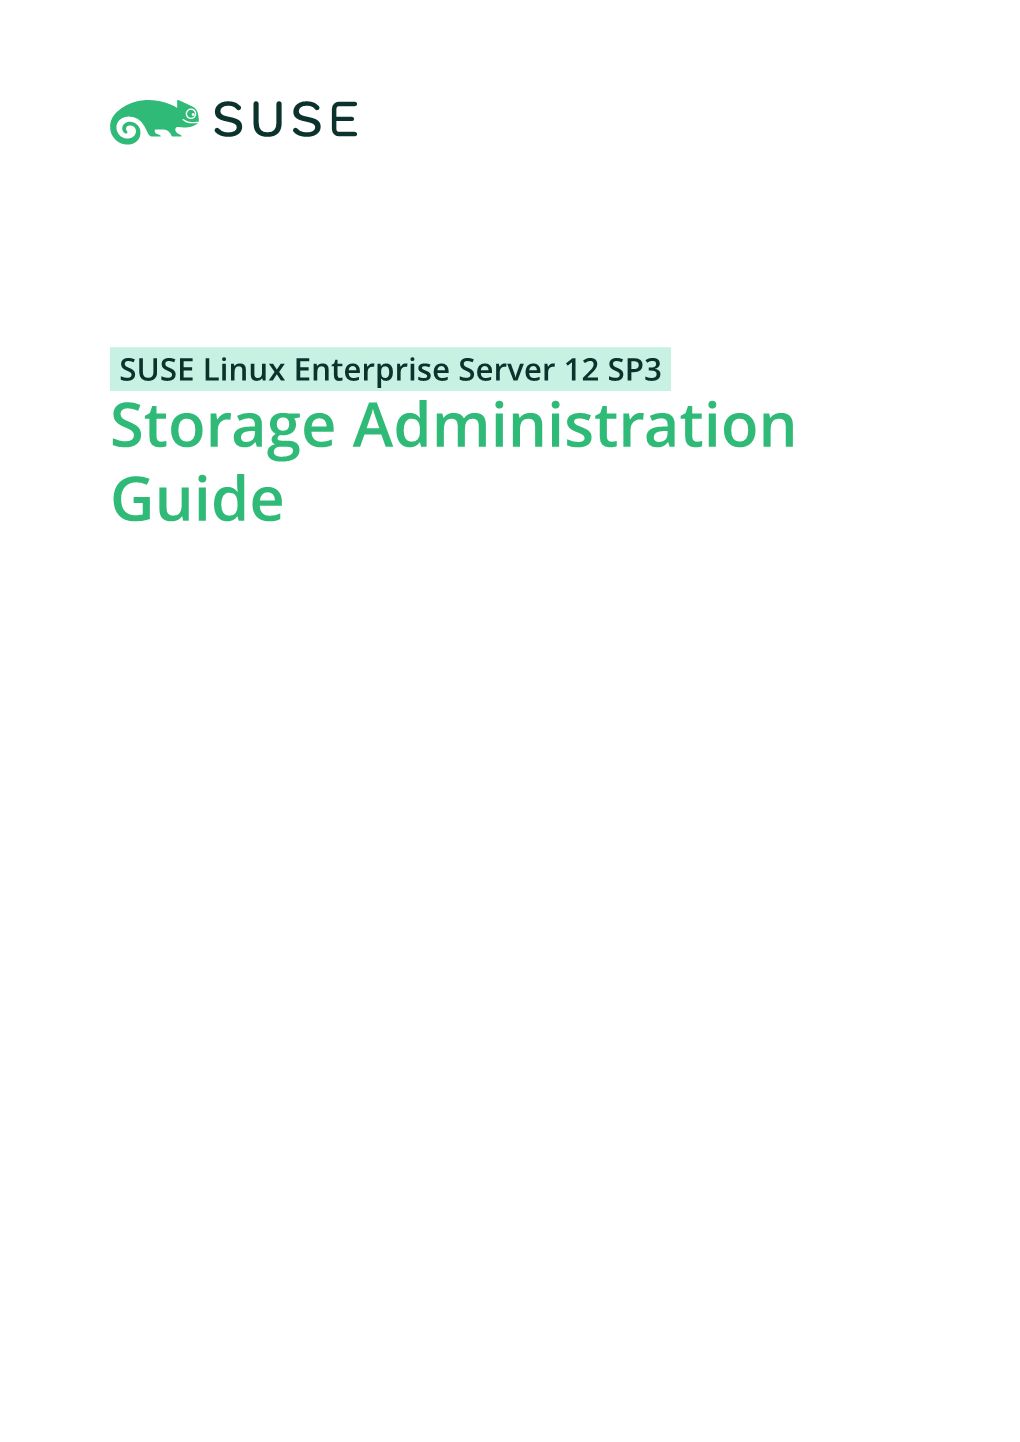 SUSE Linux Enterprise Server 12 SP3 Storage Administration Guide Storage Administration Guide SUSE Linux Enterprise Server 12 SP3